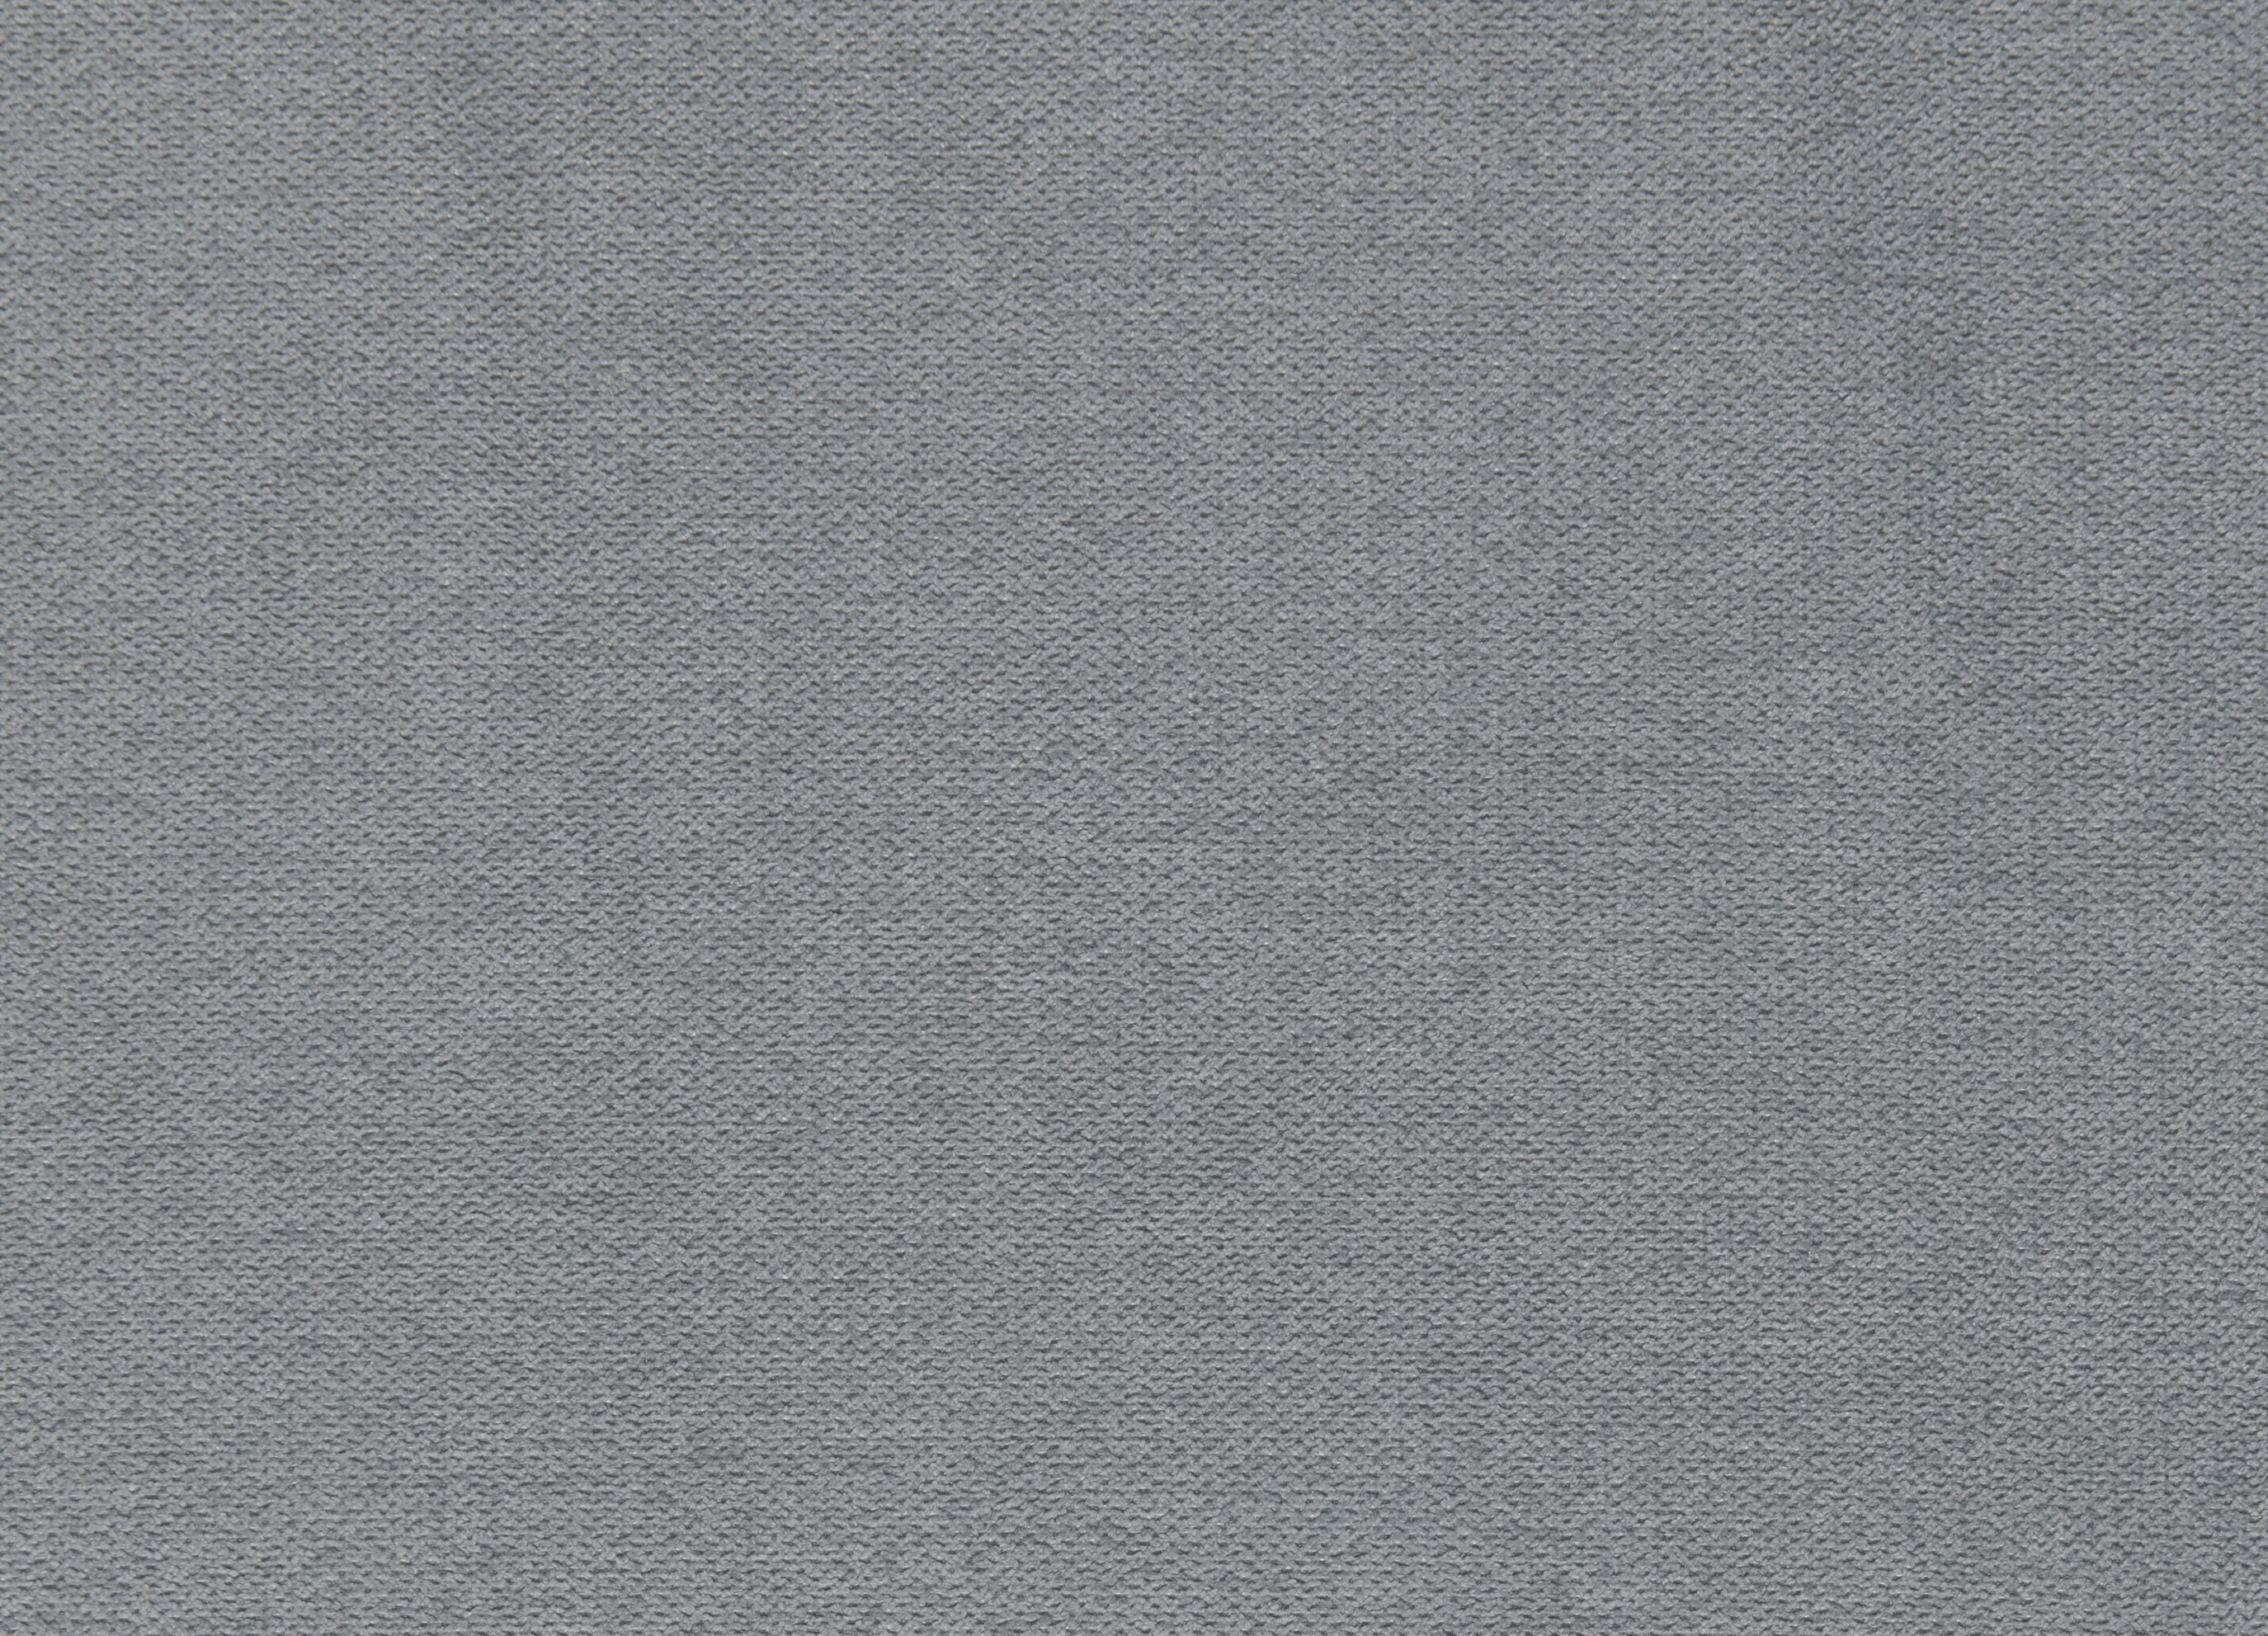 Slaapbank 200 x 100cm - light grey